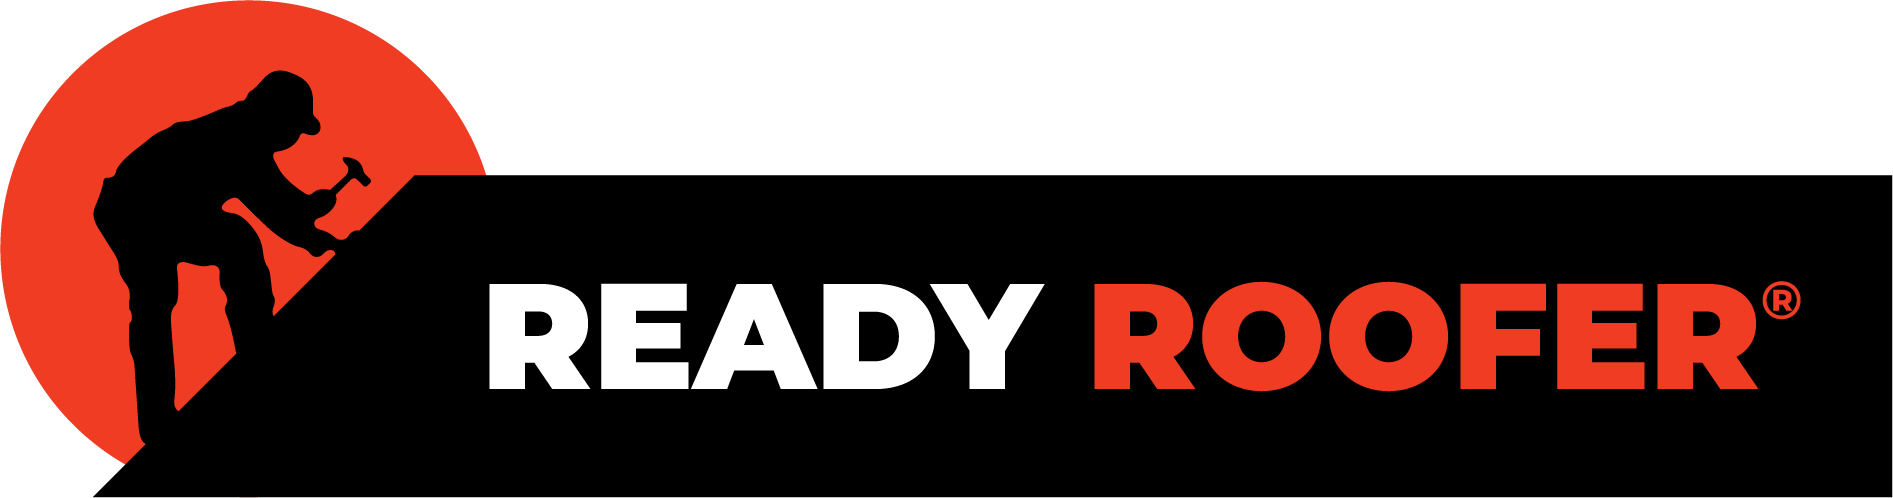 ready roofer logo